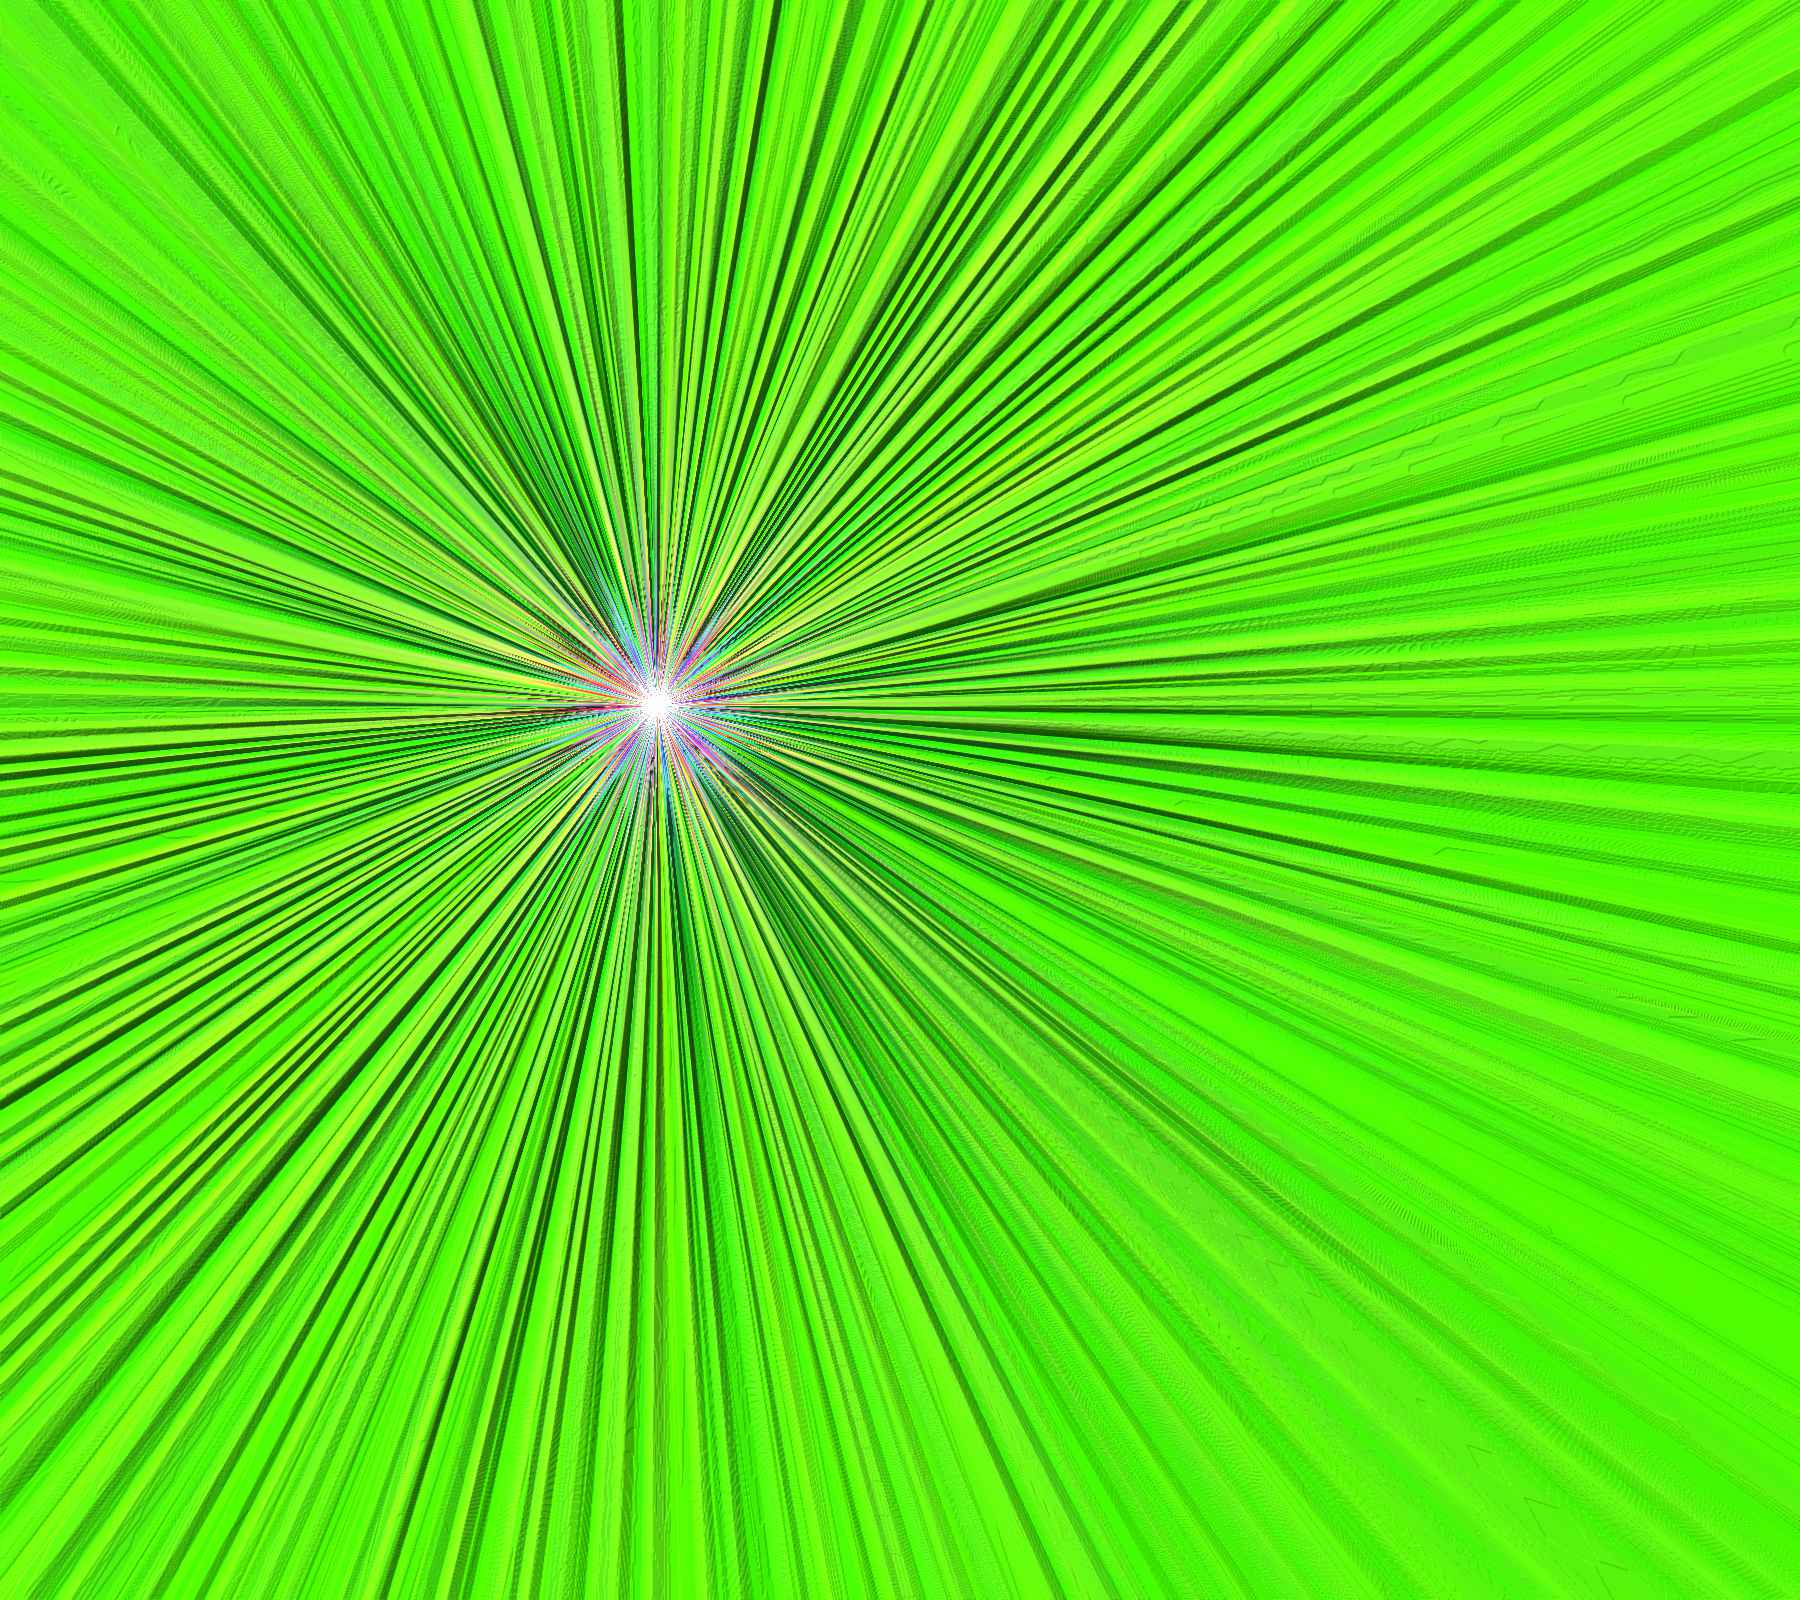 Background Wallpaper Image Lime Green Starburst Radiating Lines